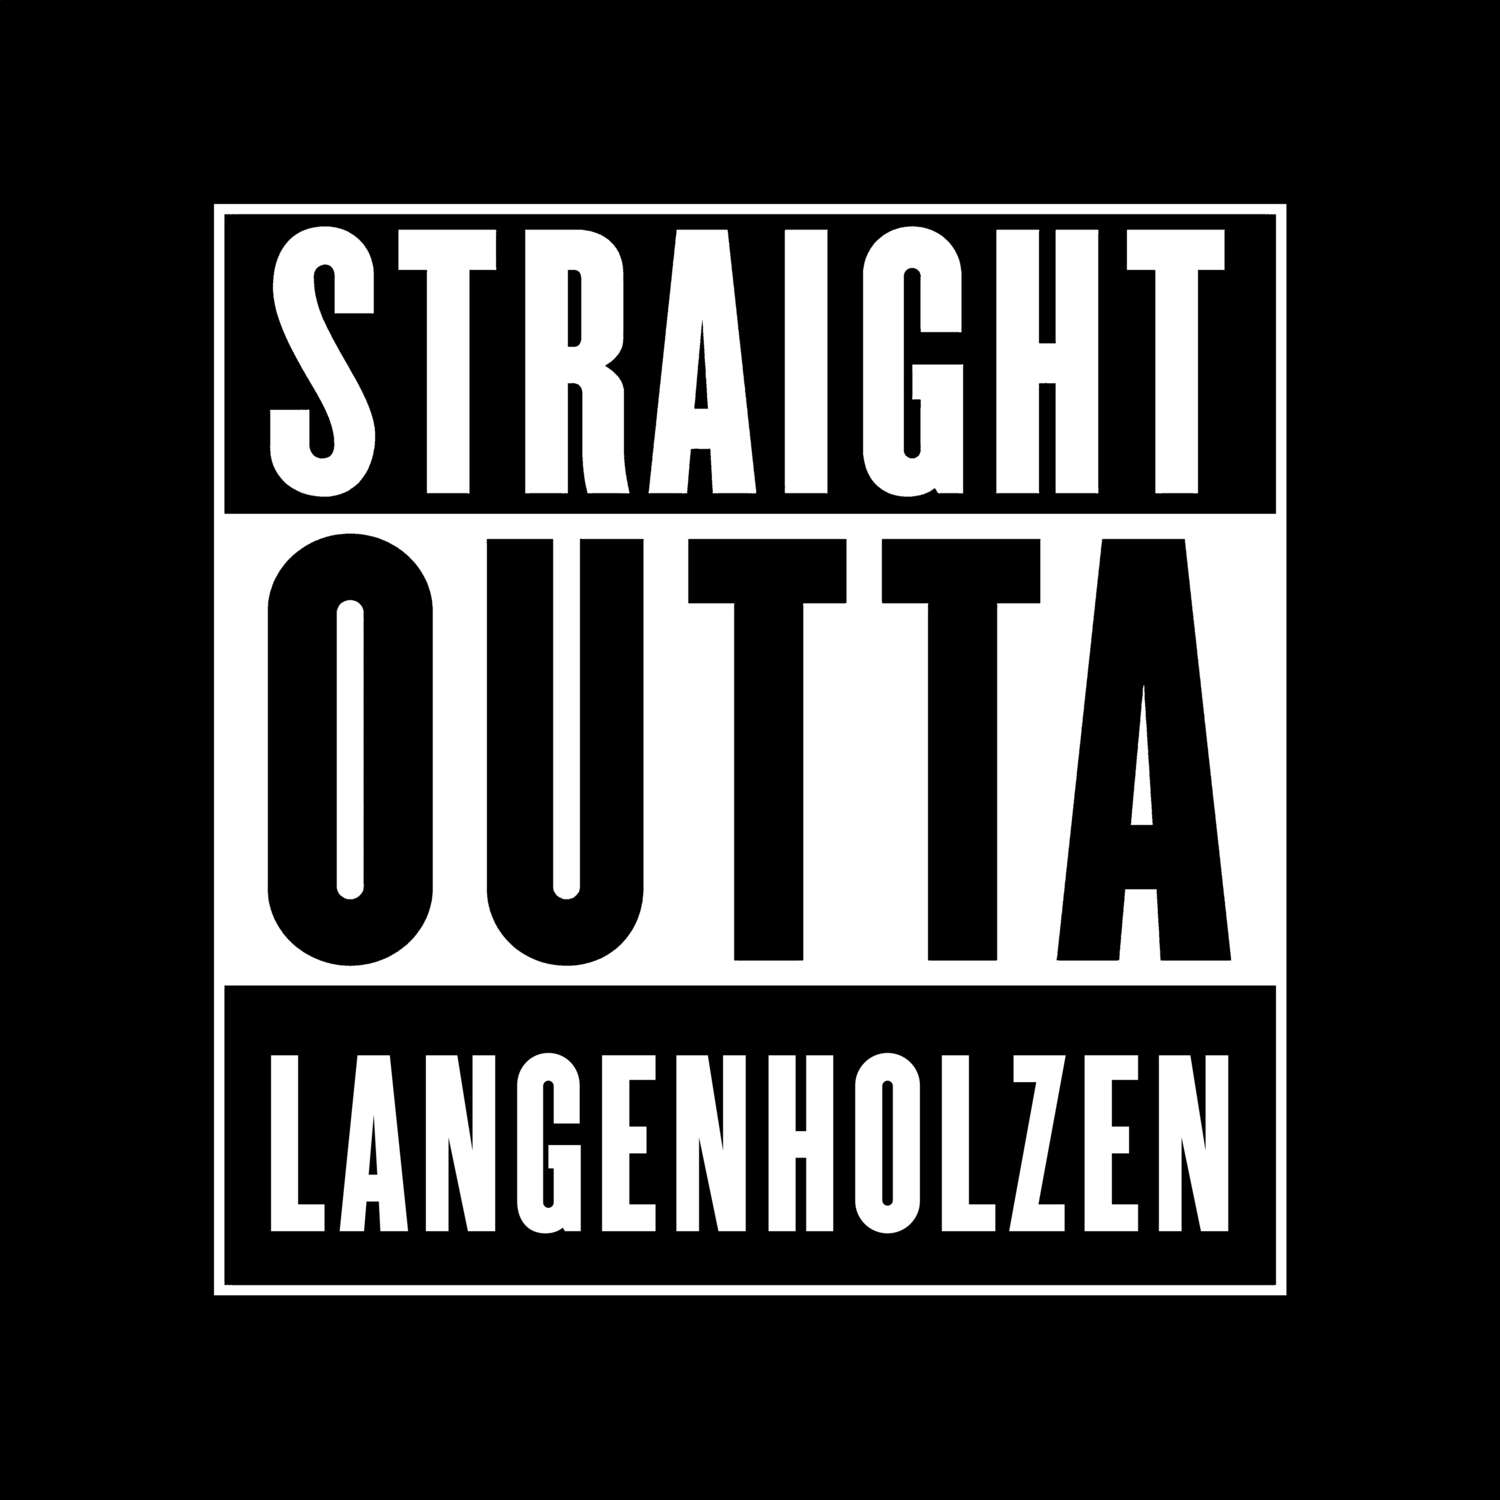 Langenholzen T-Shirt »Straight Outta«